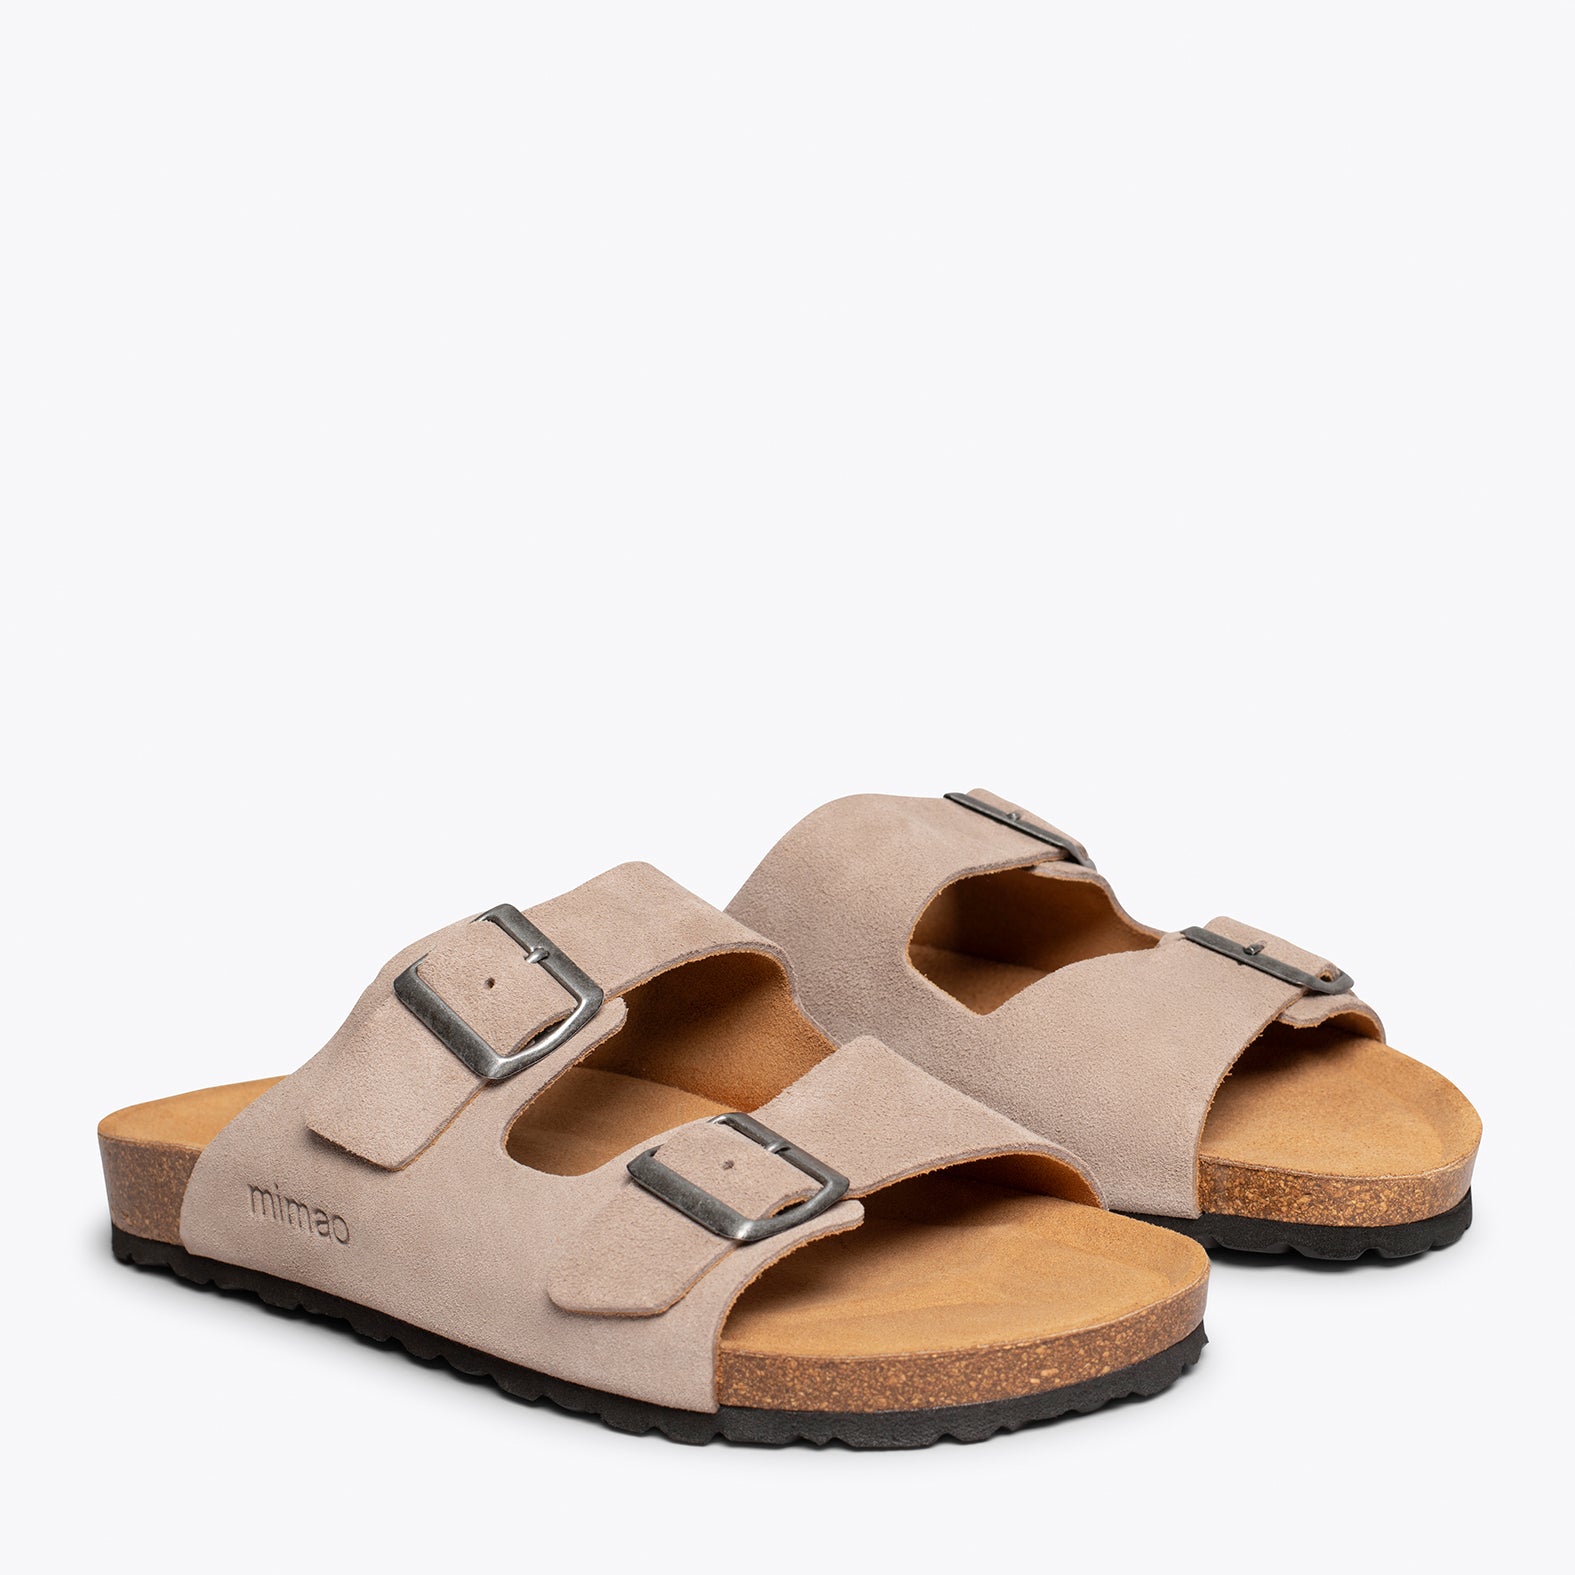 BIO – GREY sandal with bio confort for men